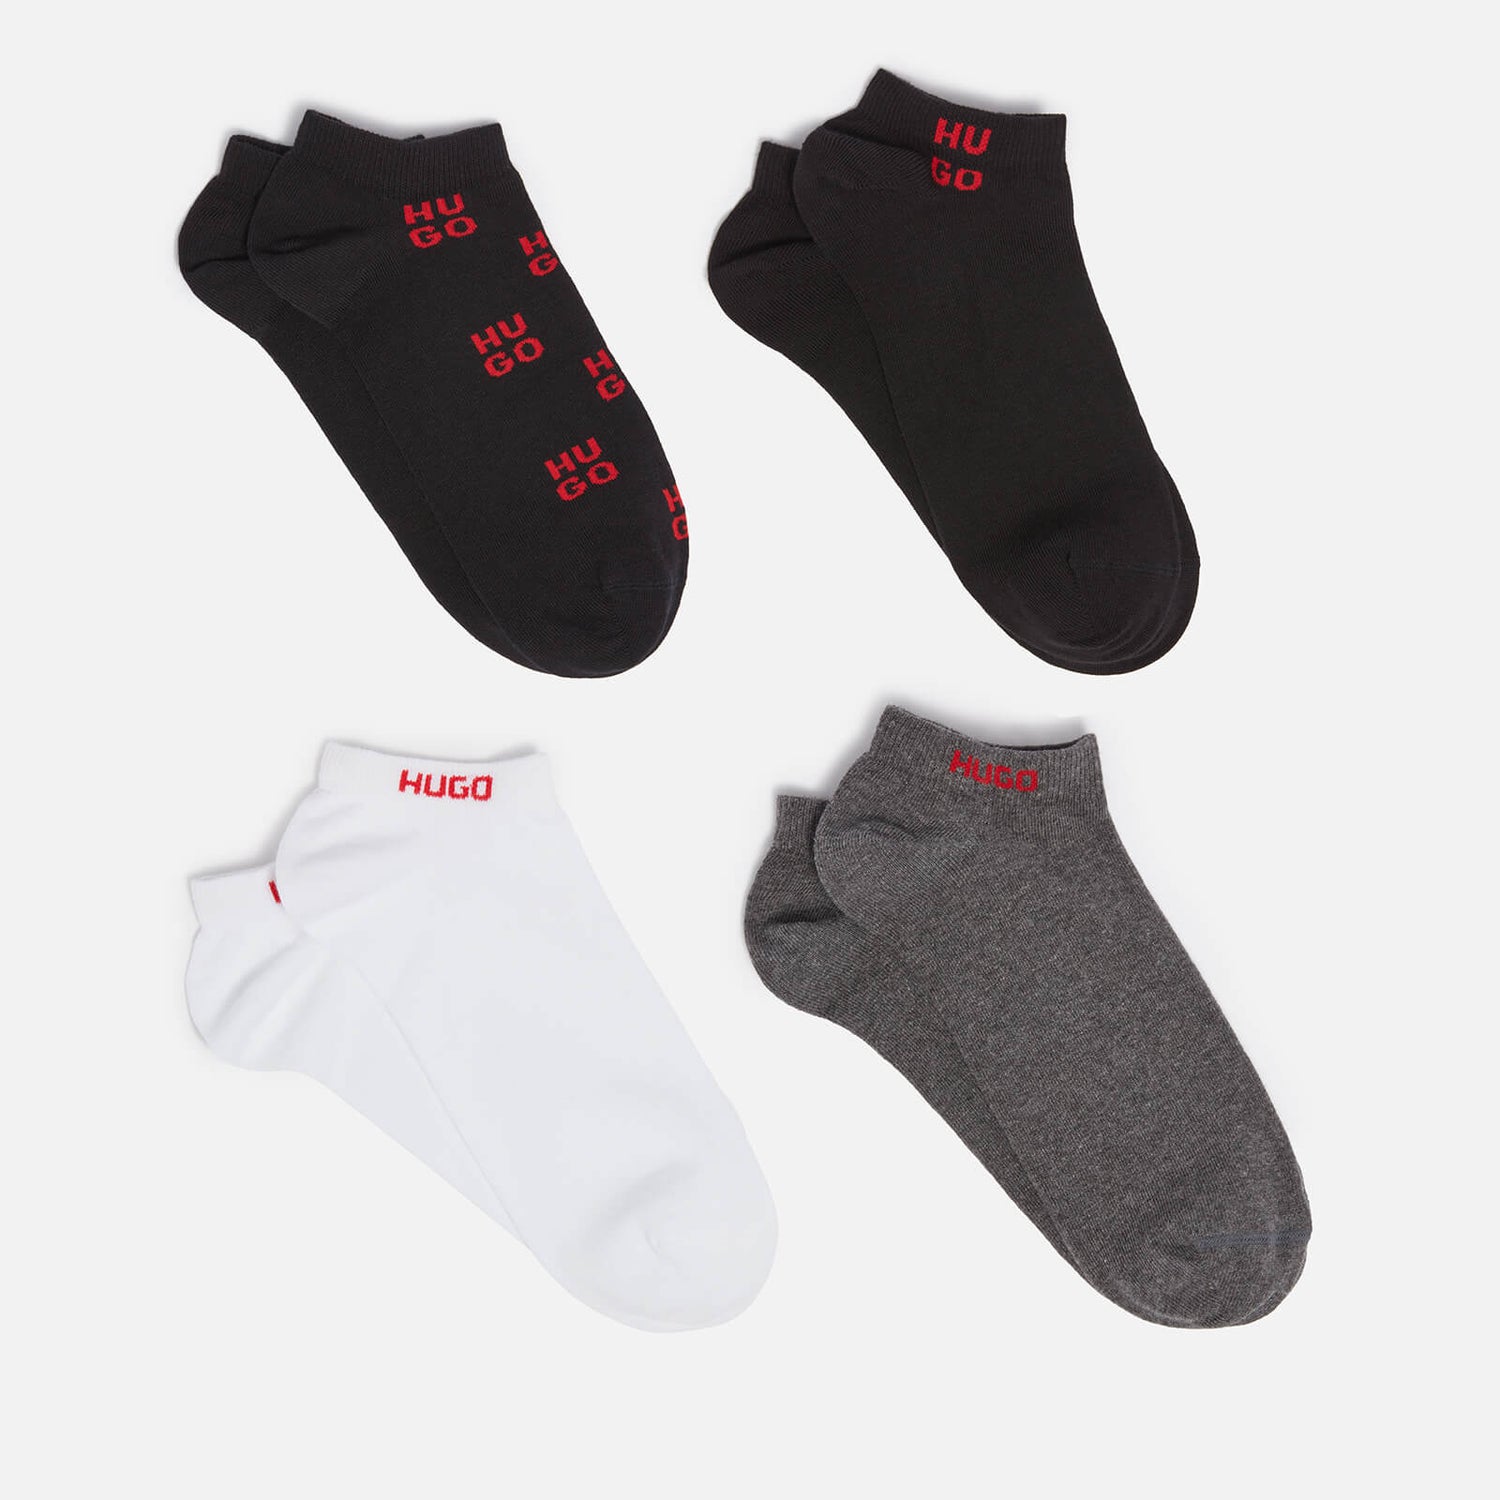 HUGO Bodywear Four-Pack Cotton-Blend Socks Gift Set | TheHut.com